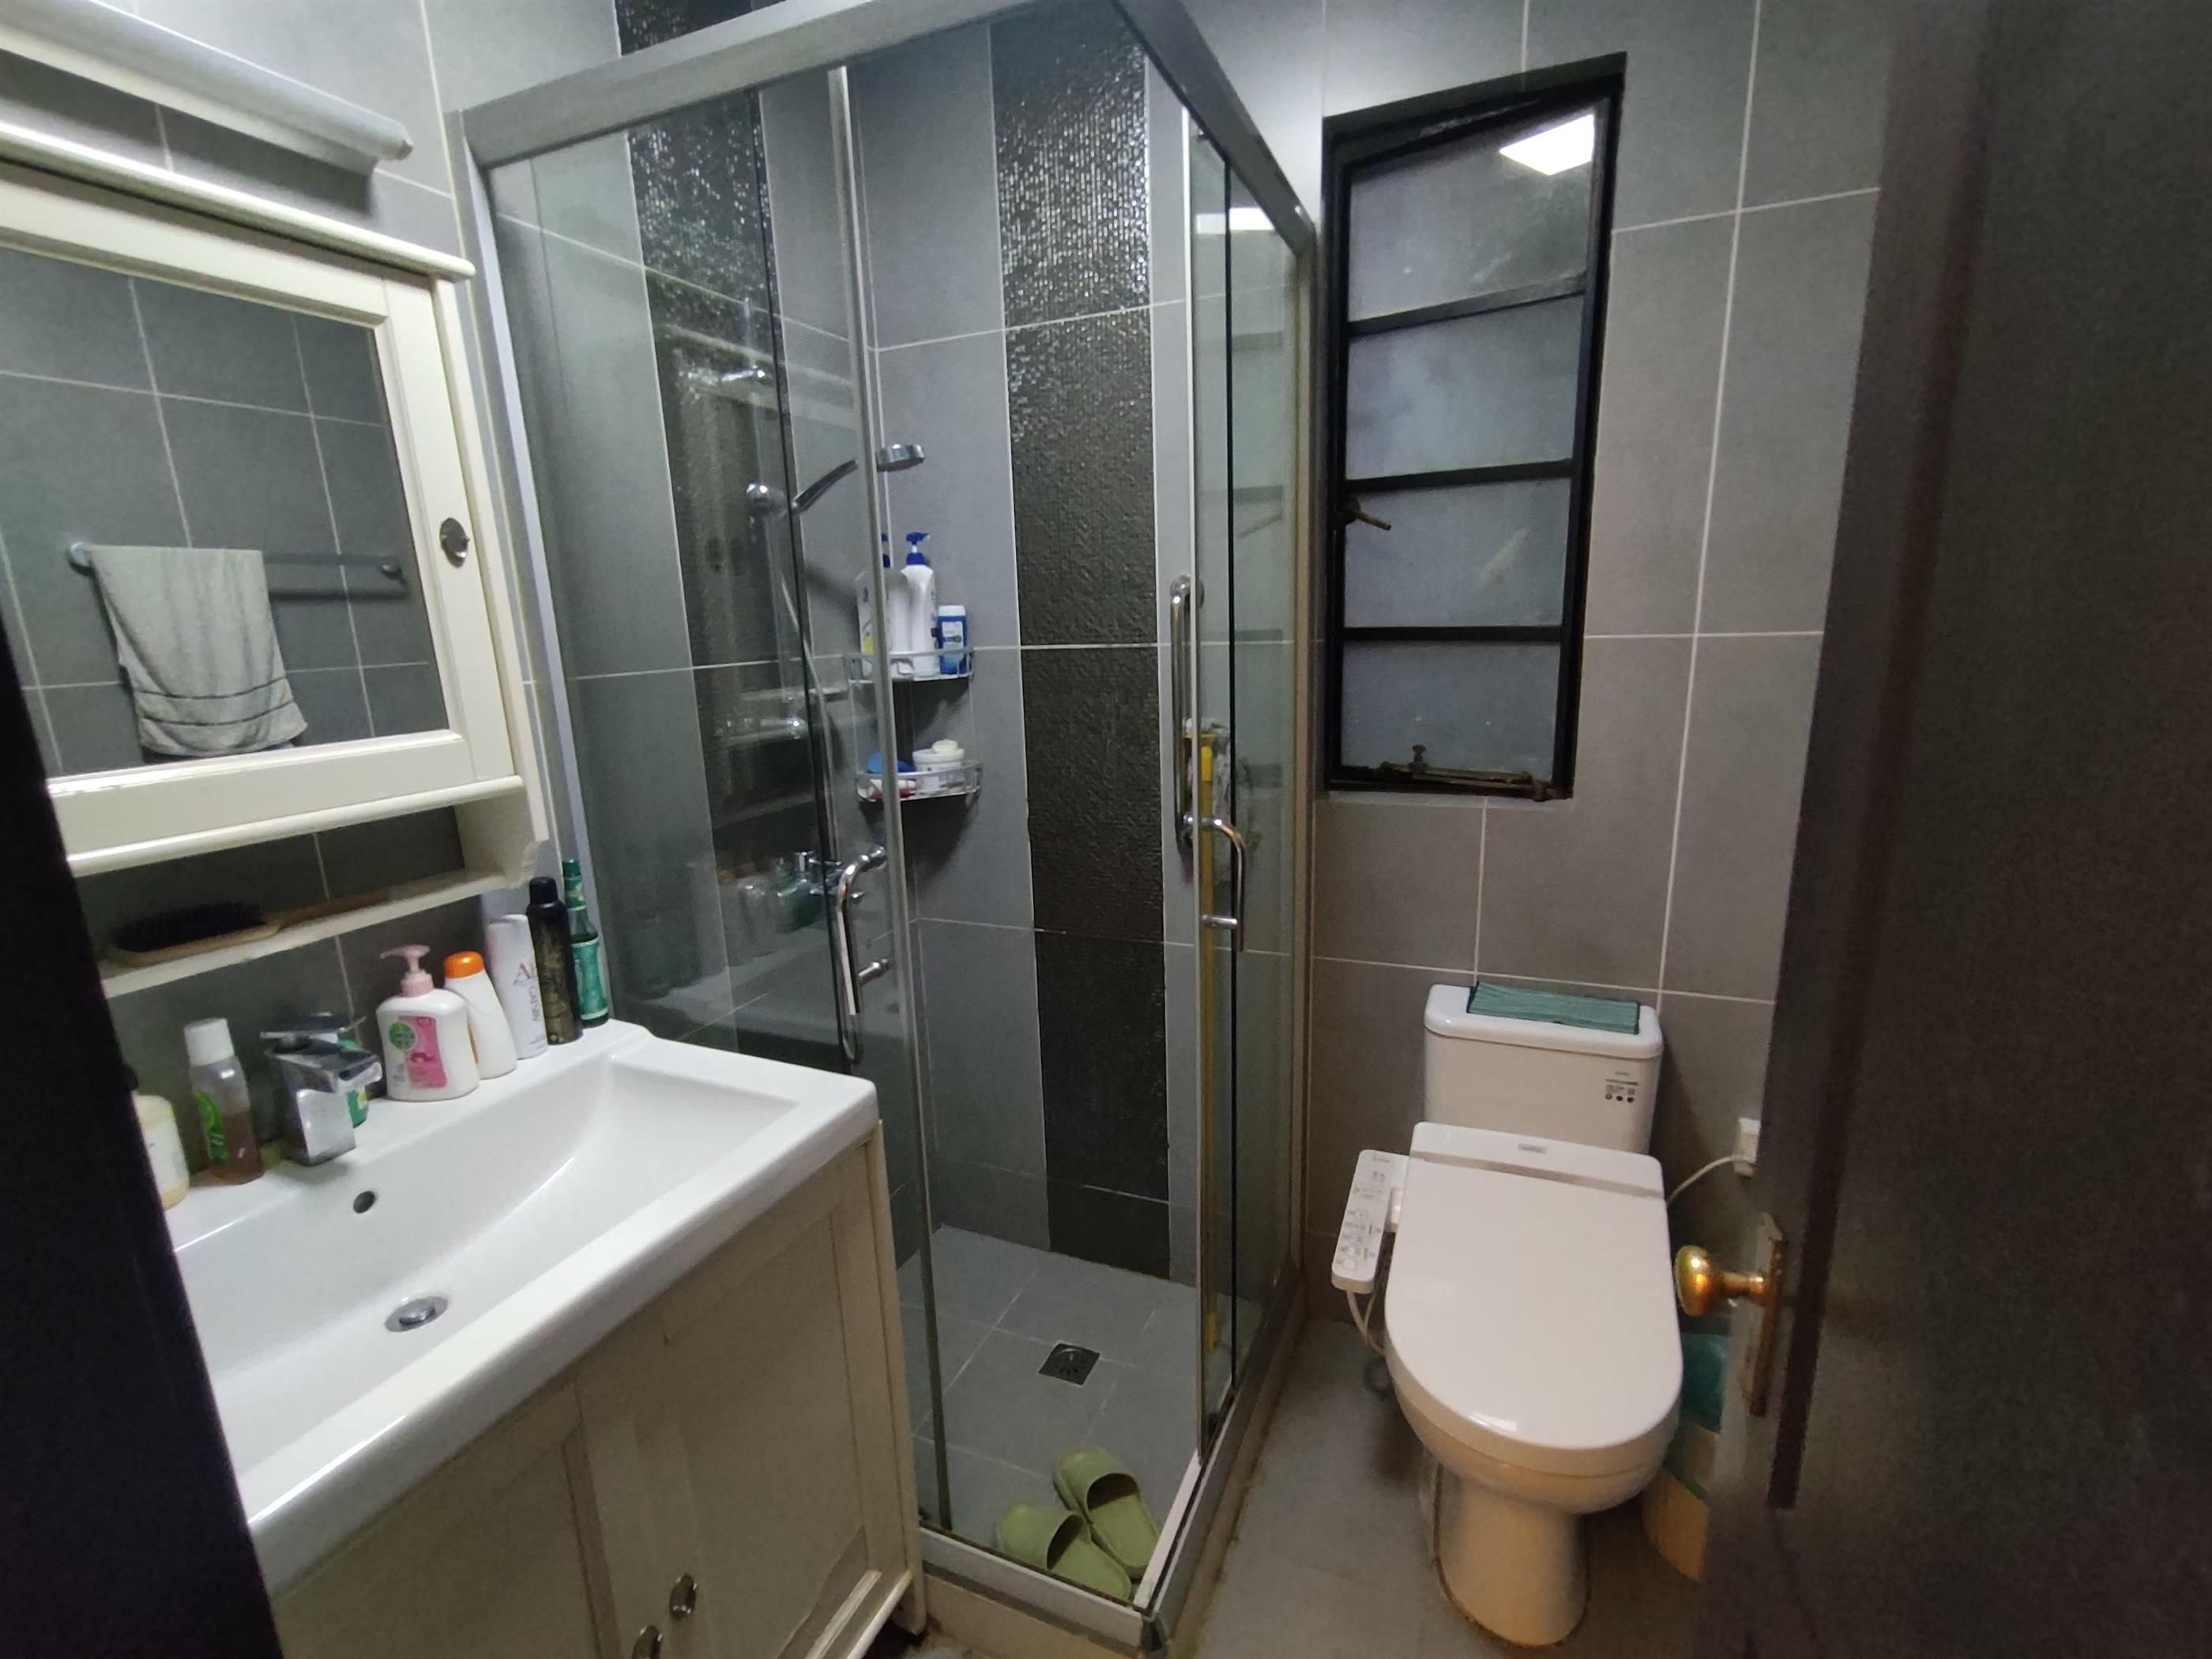 Bathroom *** For Sale *** 3-Floor 5-Room Nanjing W Rd Lane House in Shanghai